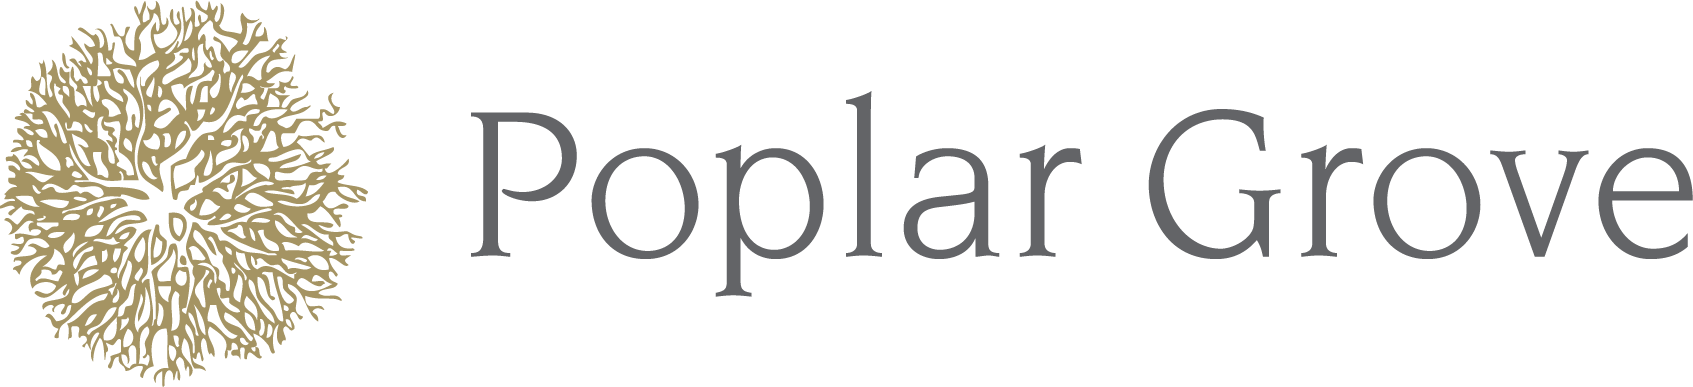 Poplar Grove Winery Logo (Link to homepage)